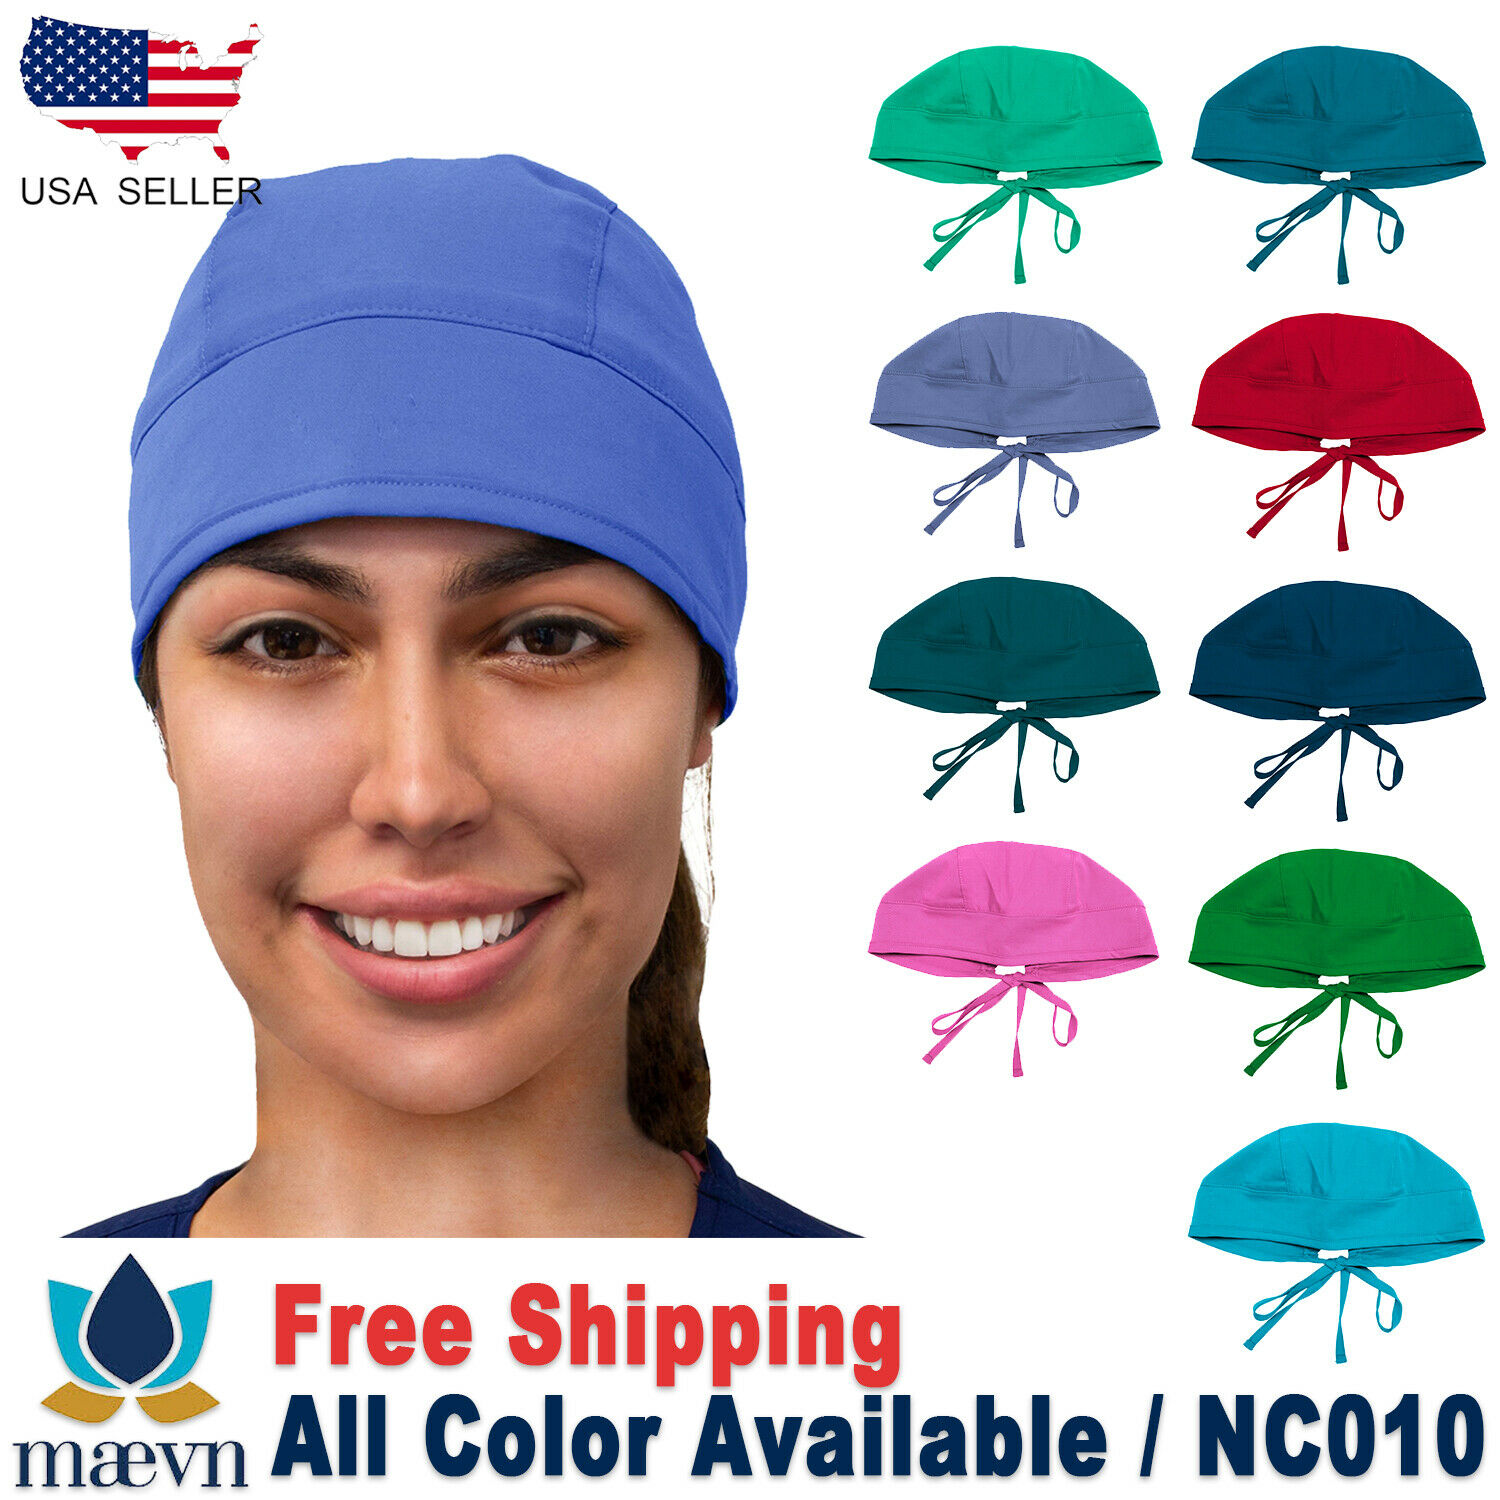 Maevn Unisex Doctor Nurse Solid Scrub Cap Head Cover Hat NC010